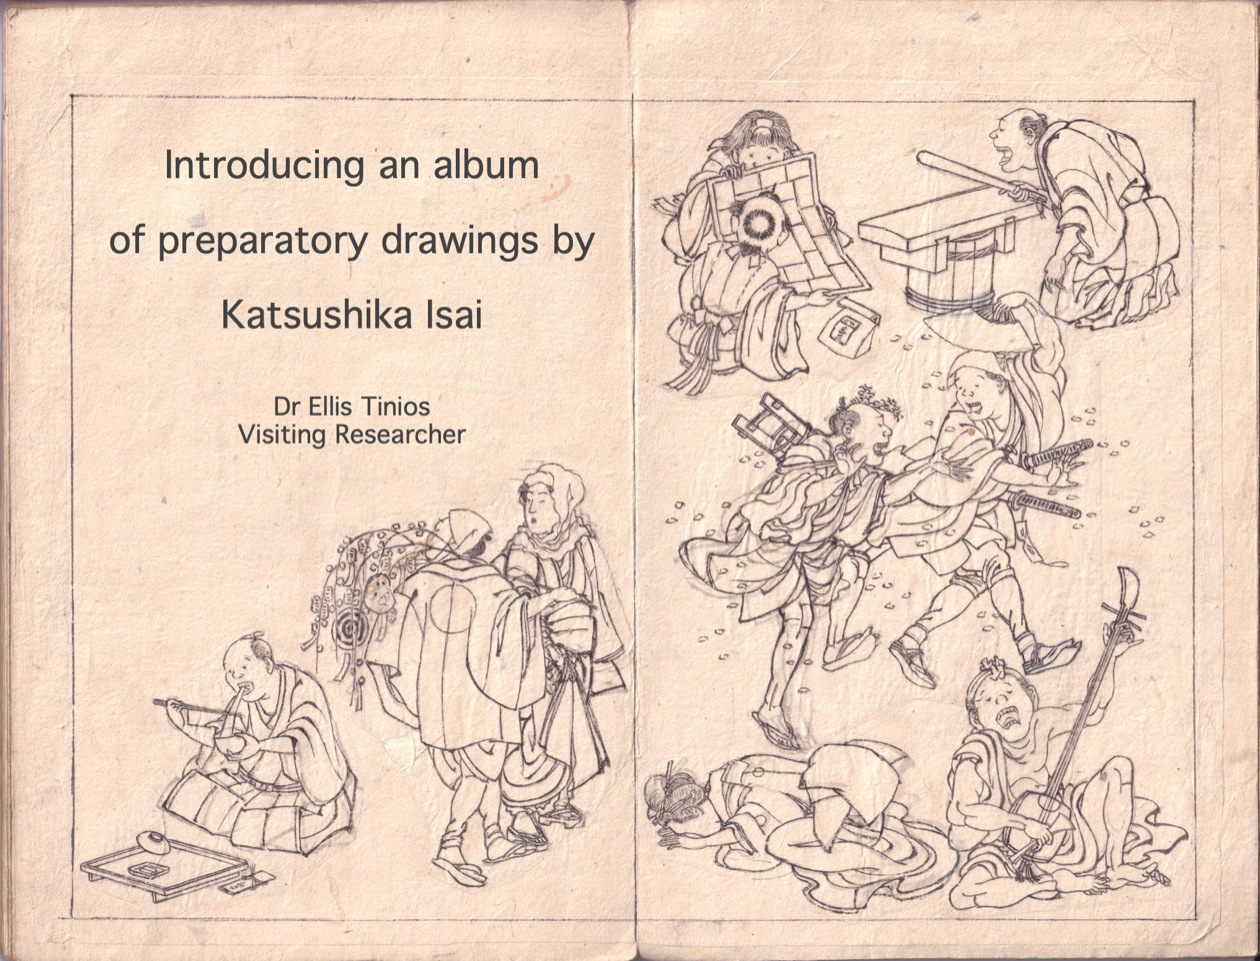 「Introducing an album of preliminary drawings by Katsushika Isai」